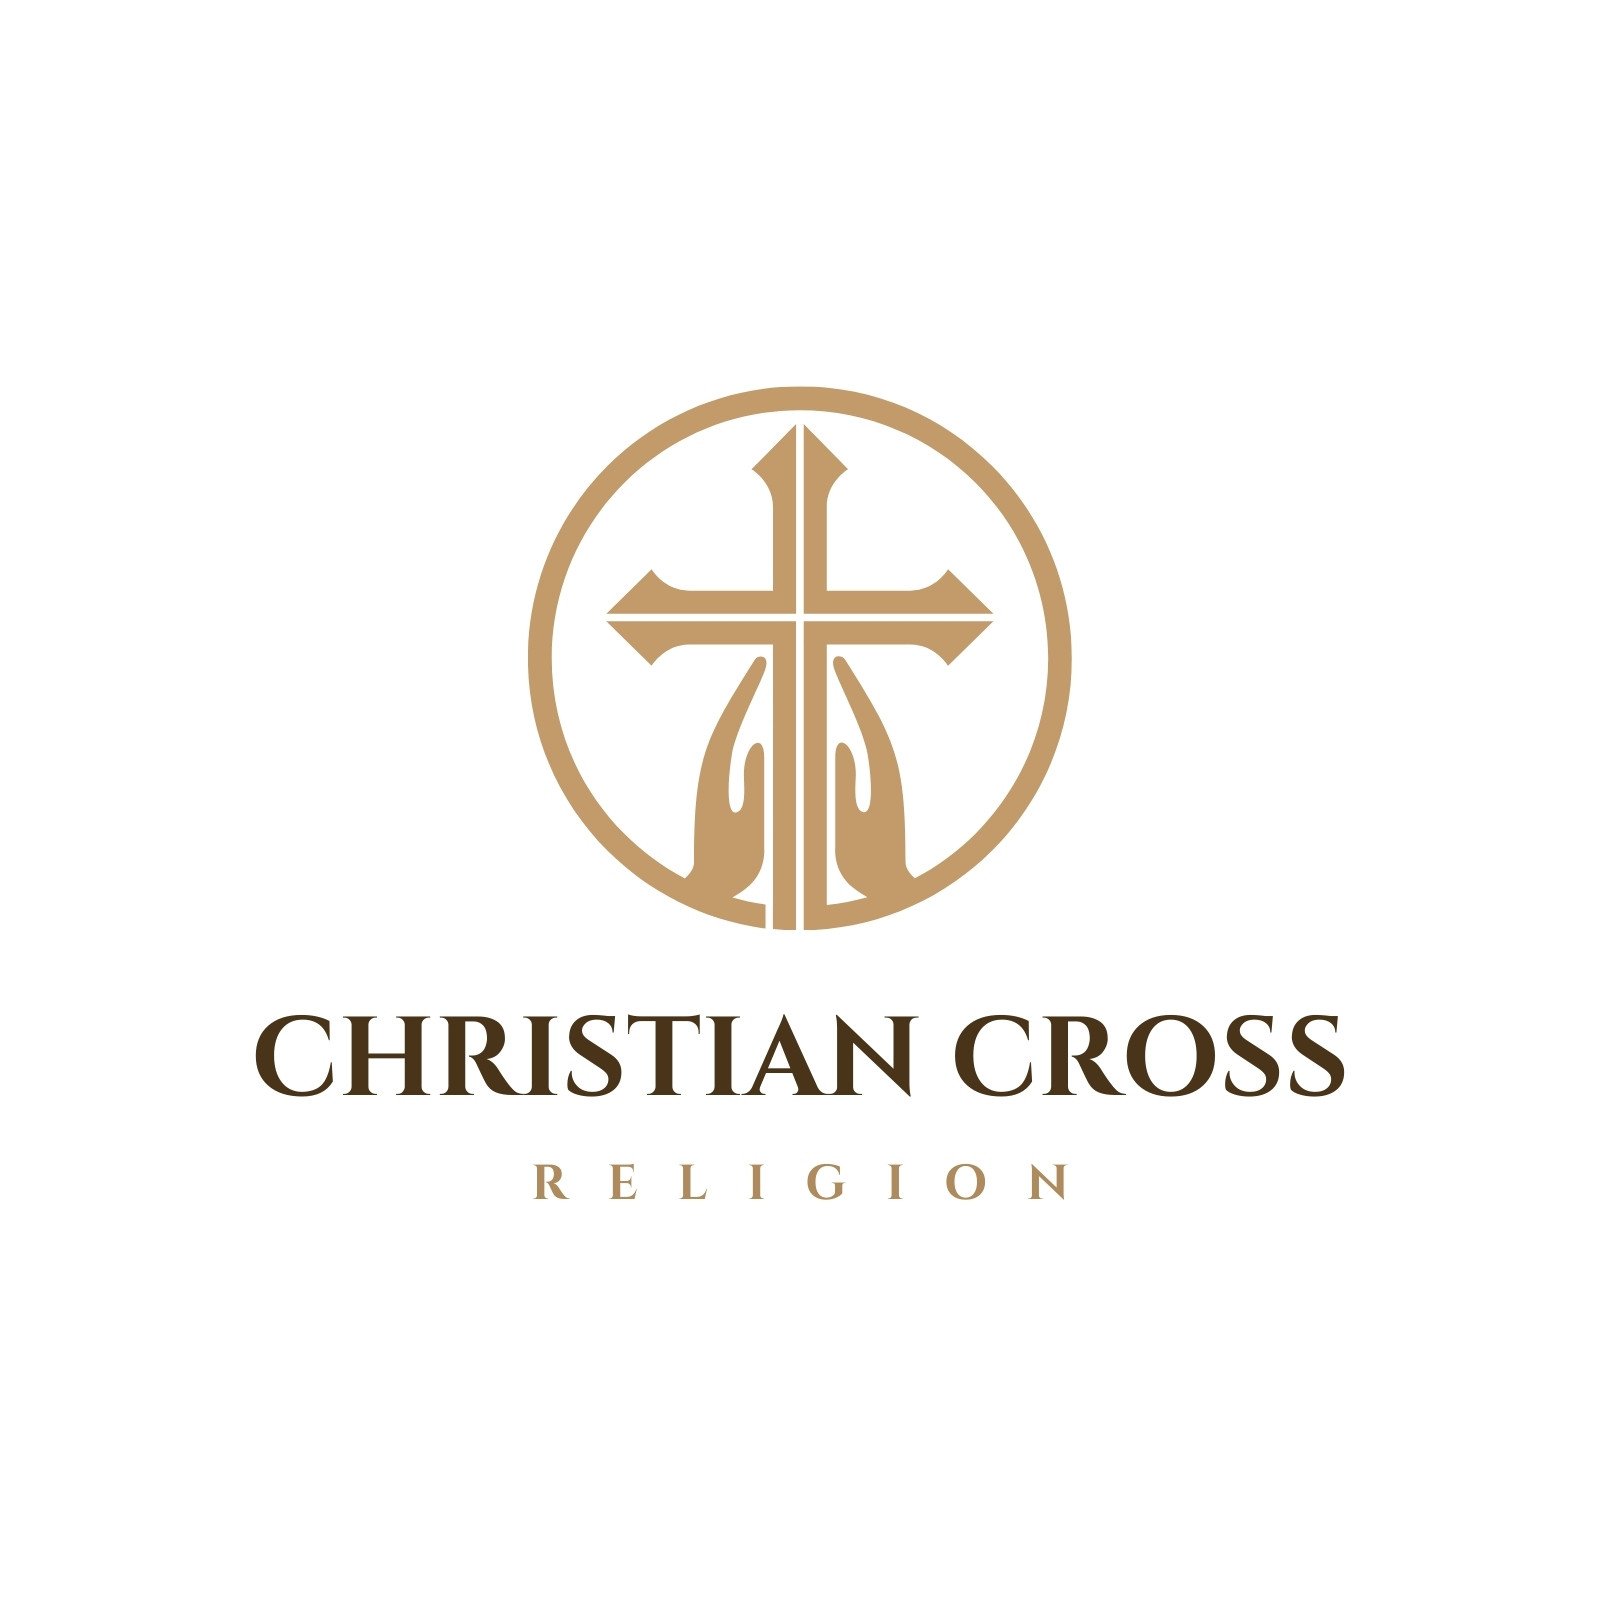 Religion Logo Template Editable Design to Download